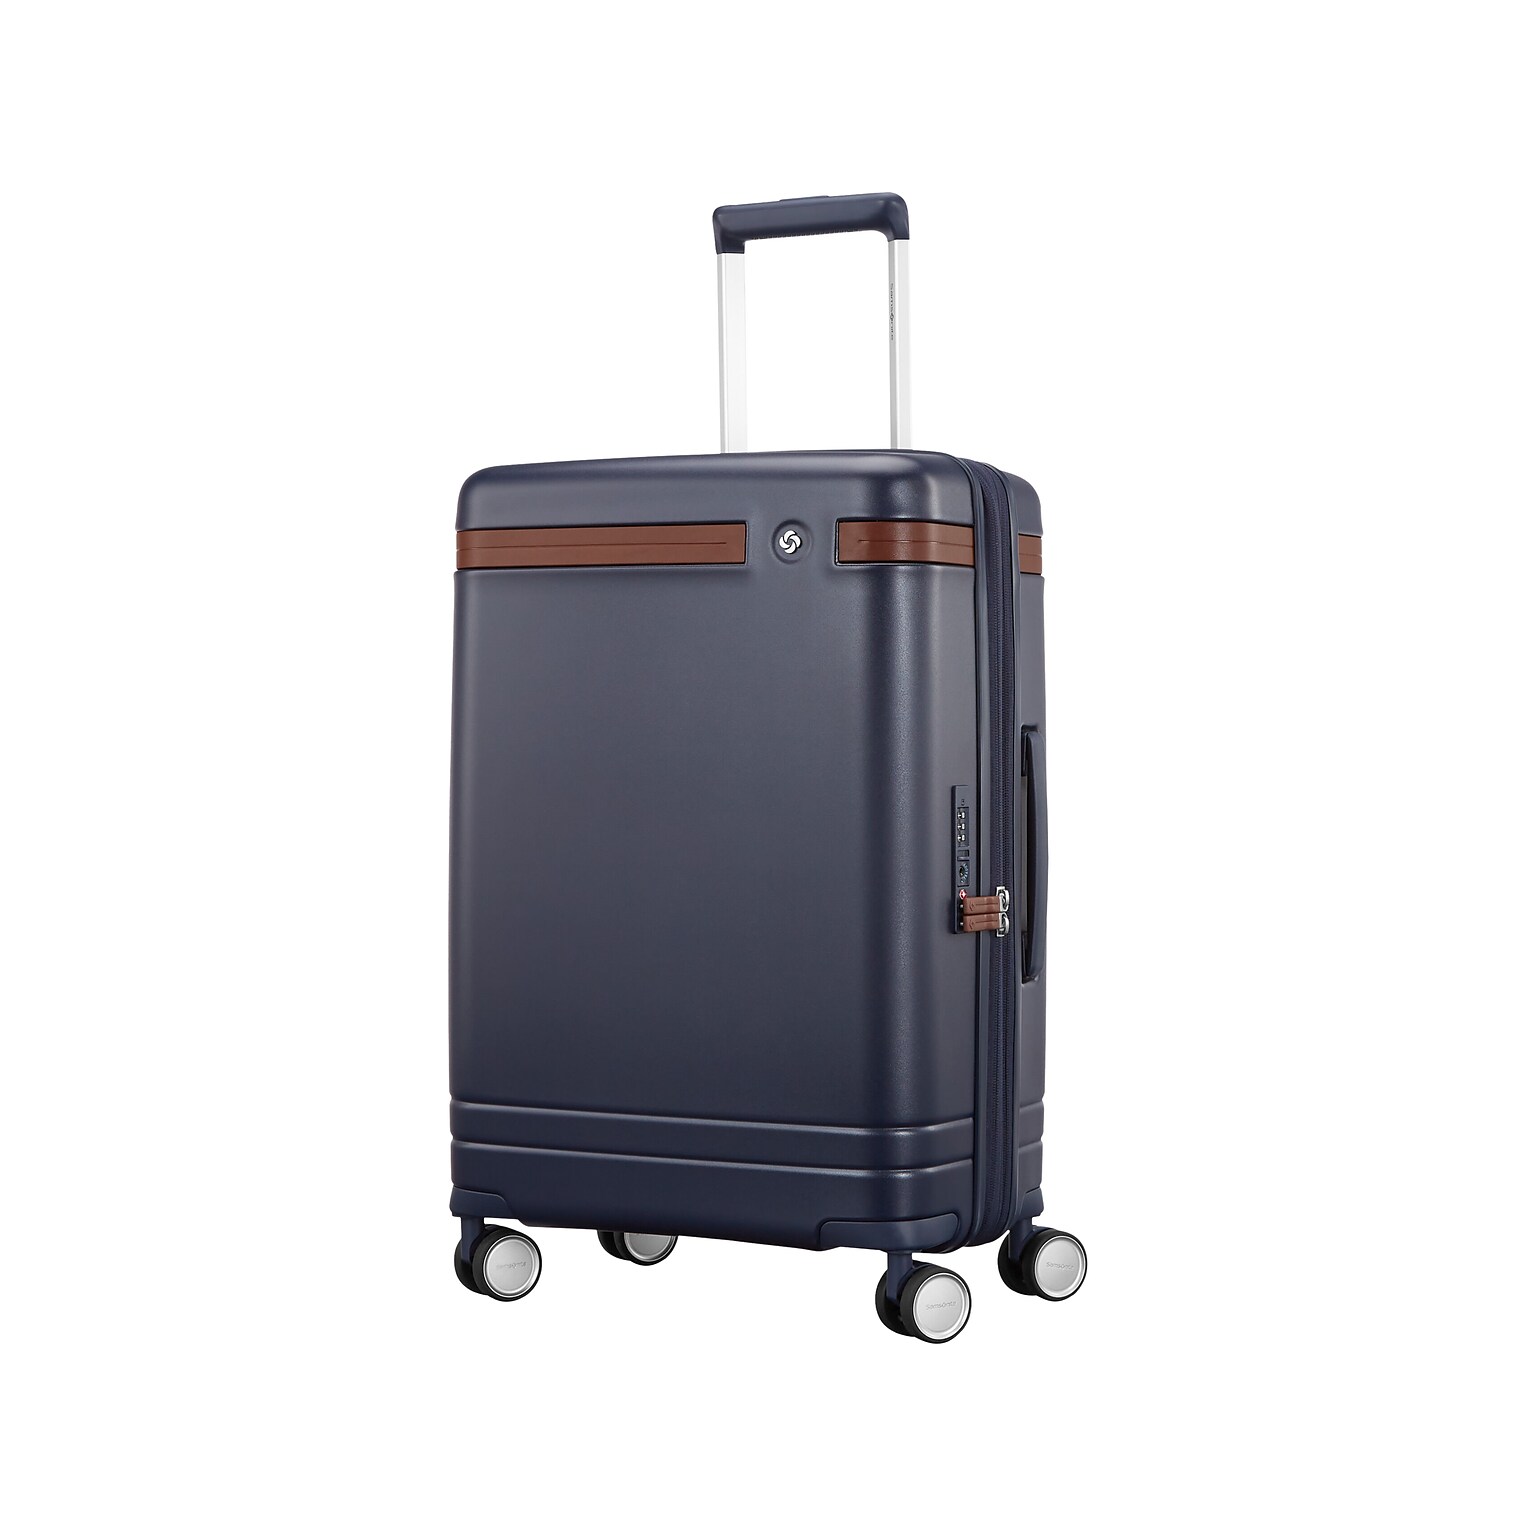 Samsonite Virtuosa 23 Hardside Carry-On Suitcase, 4-Wheeled Spinner, TSA Checkpoint Friendly, Navy (149176-1596)